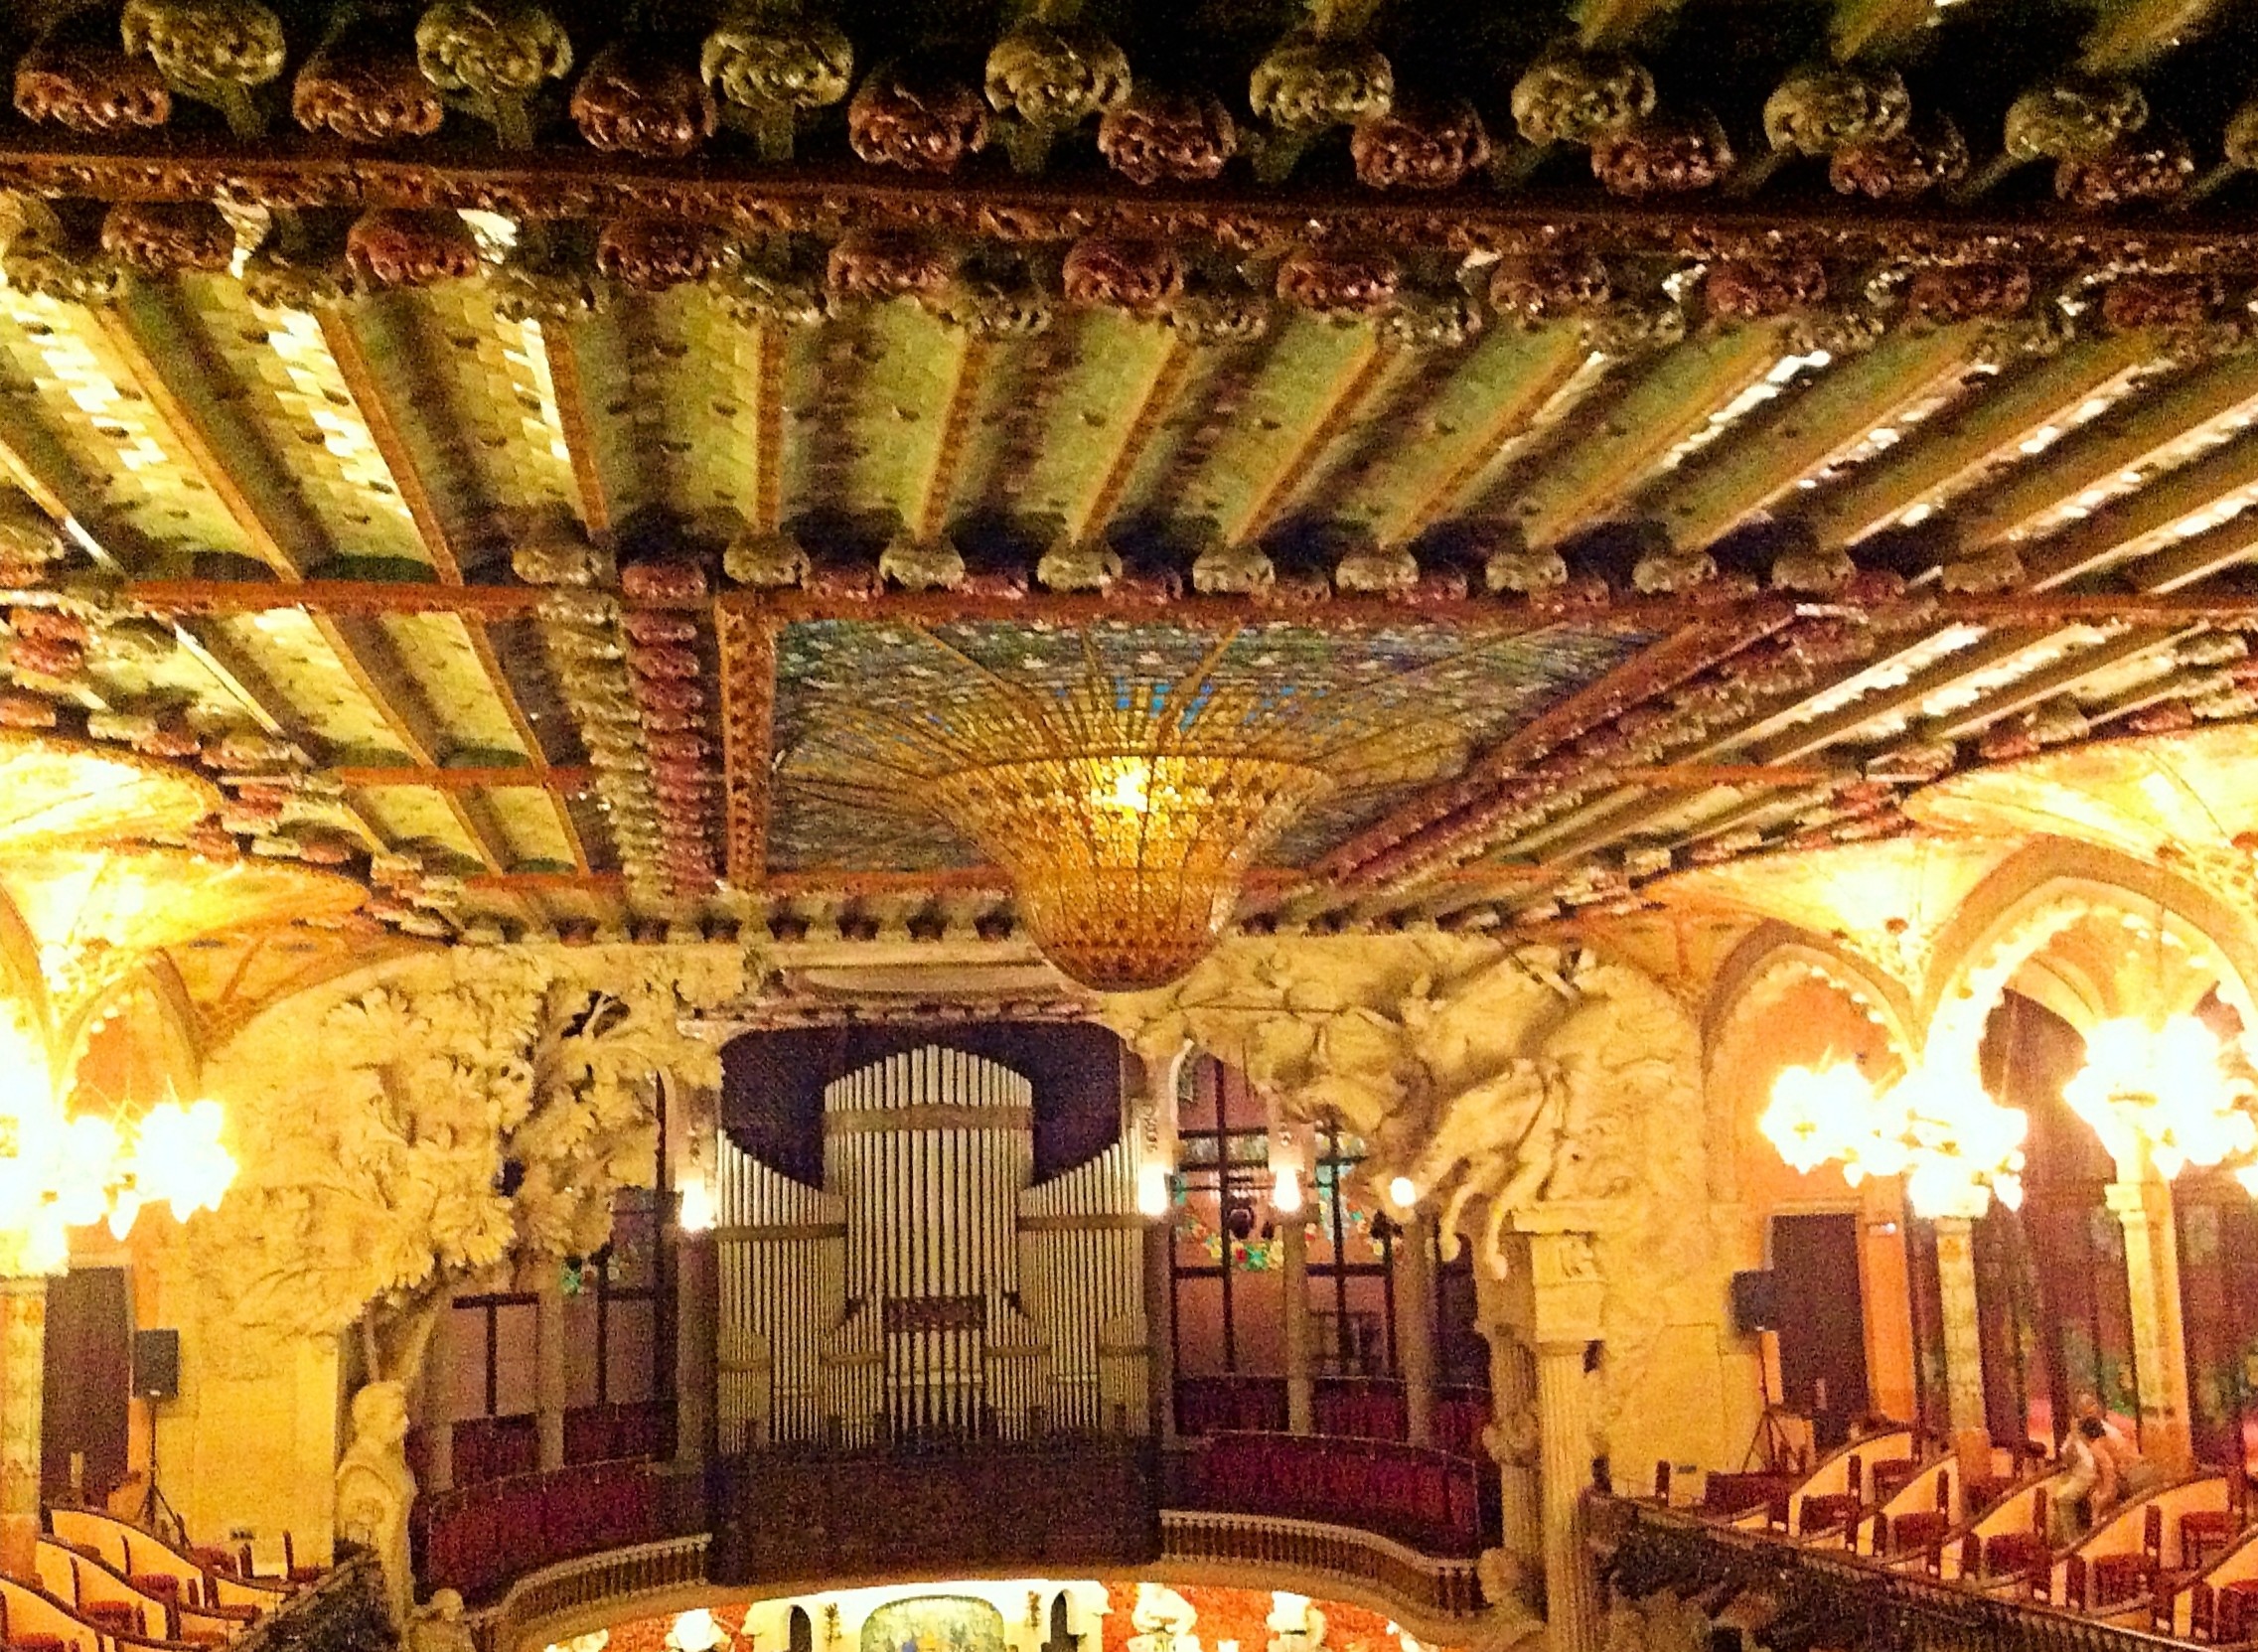 Inside the Palau de la Musica Catalana